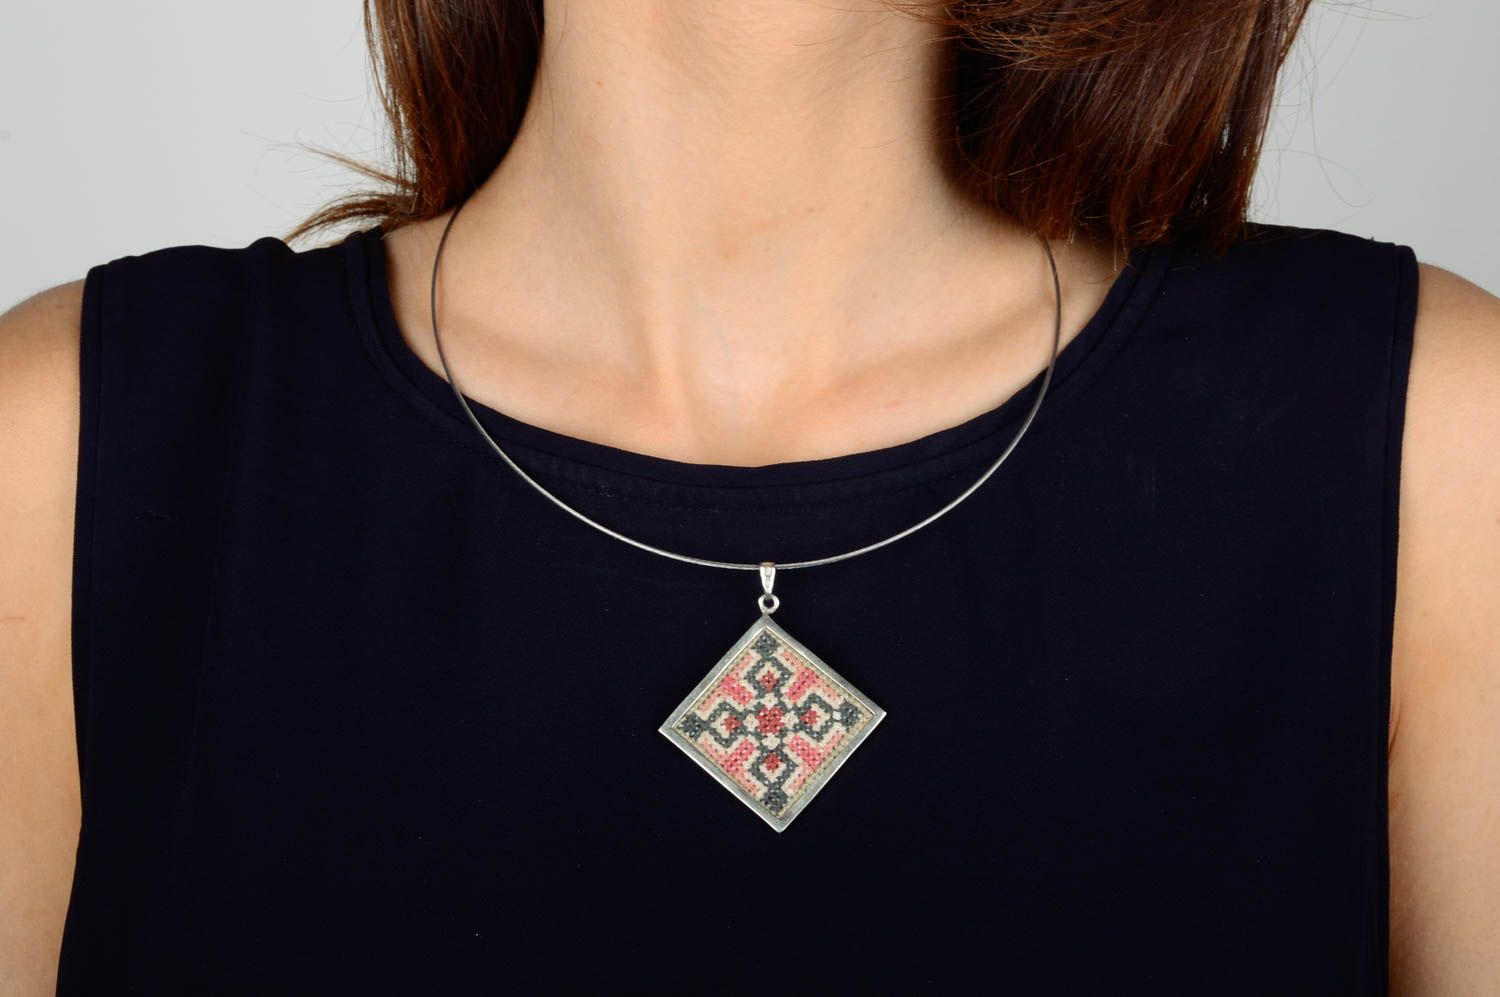 Embroidered pendant designer ethnic jewelry woman silver accessory cross-stitch photo 2